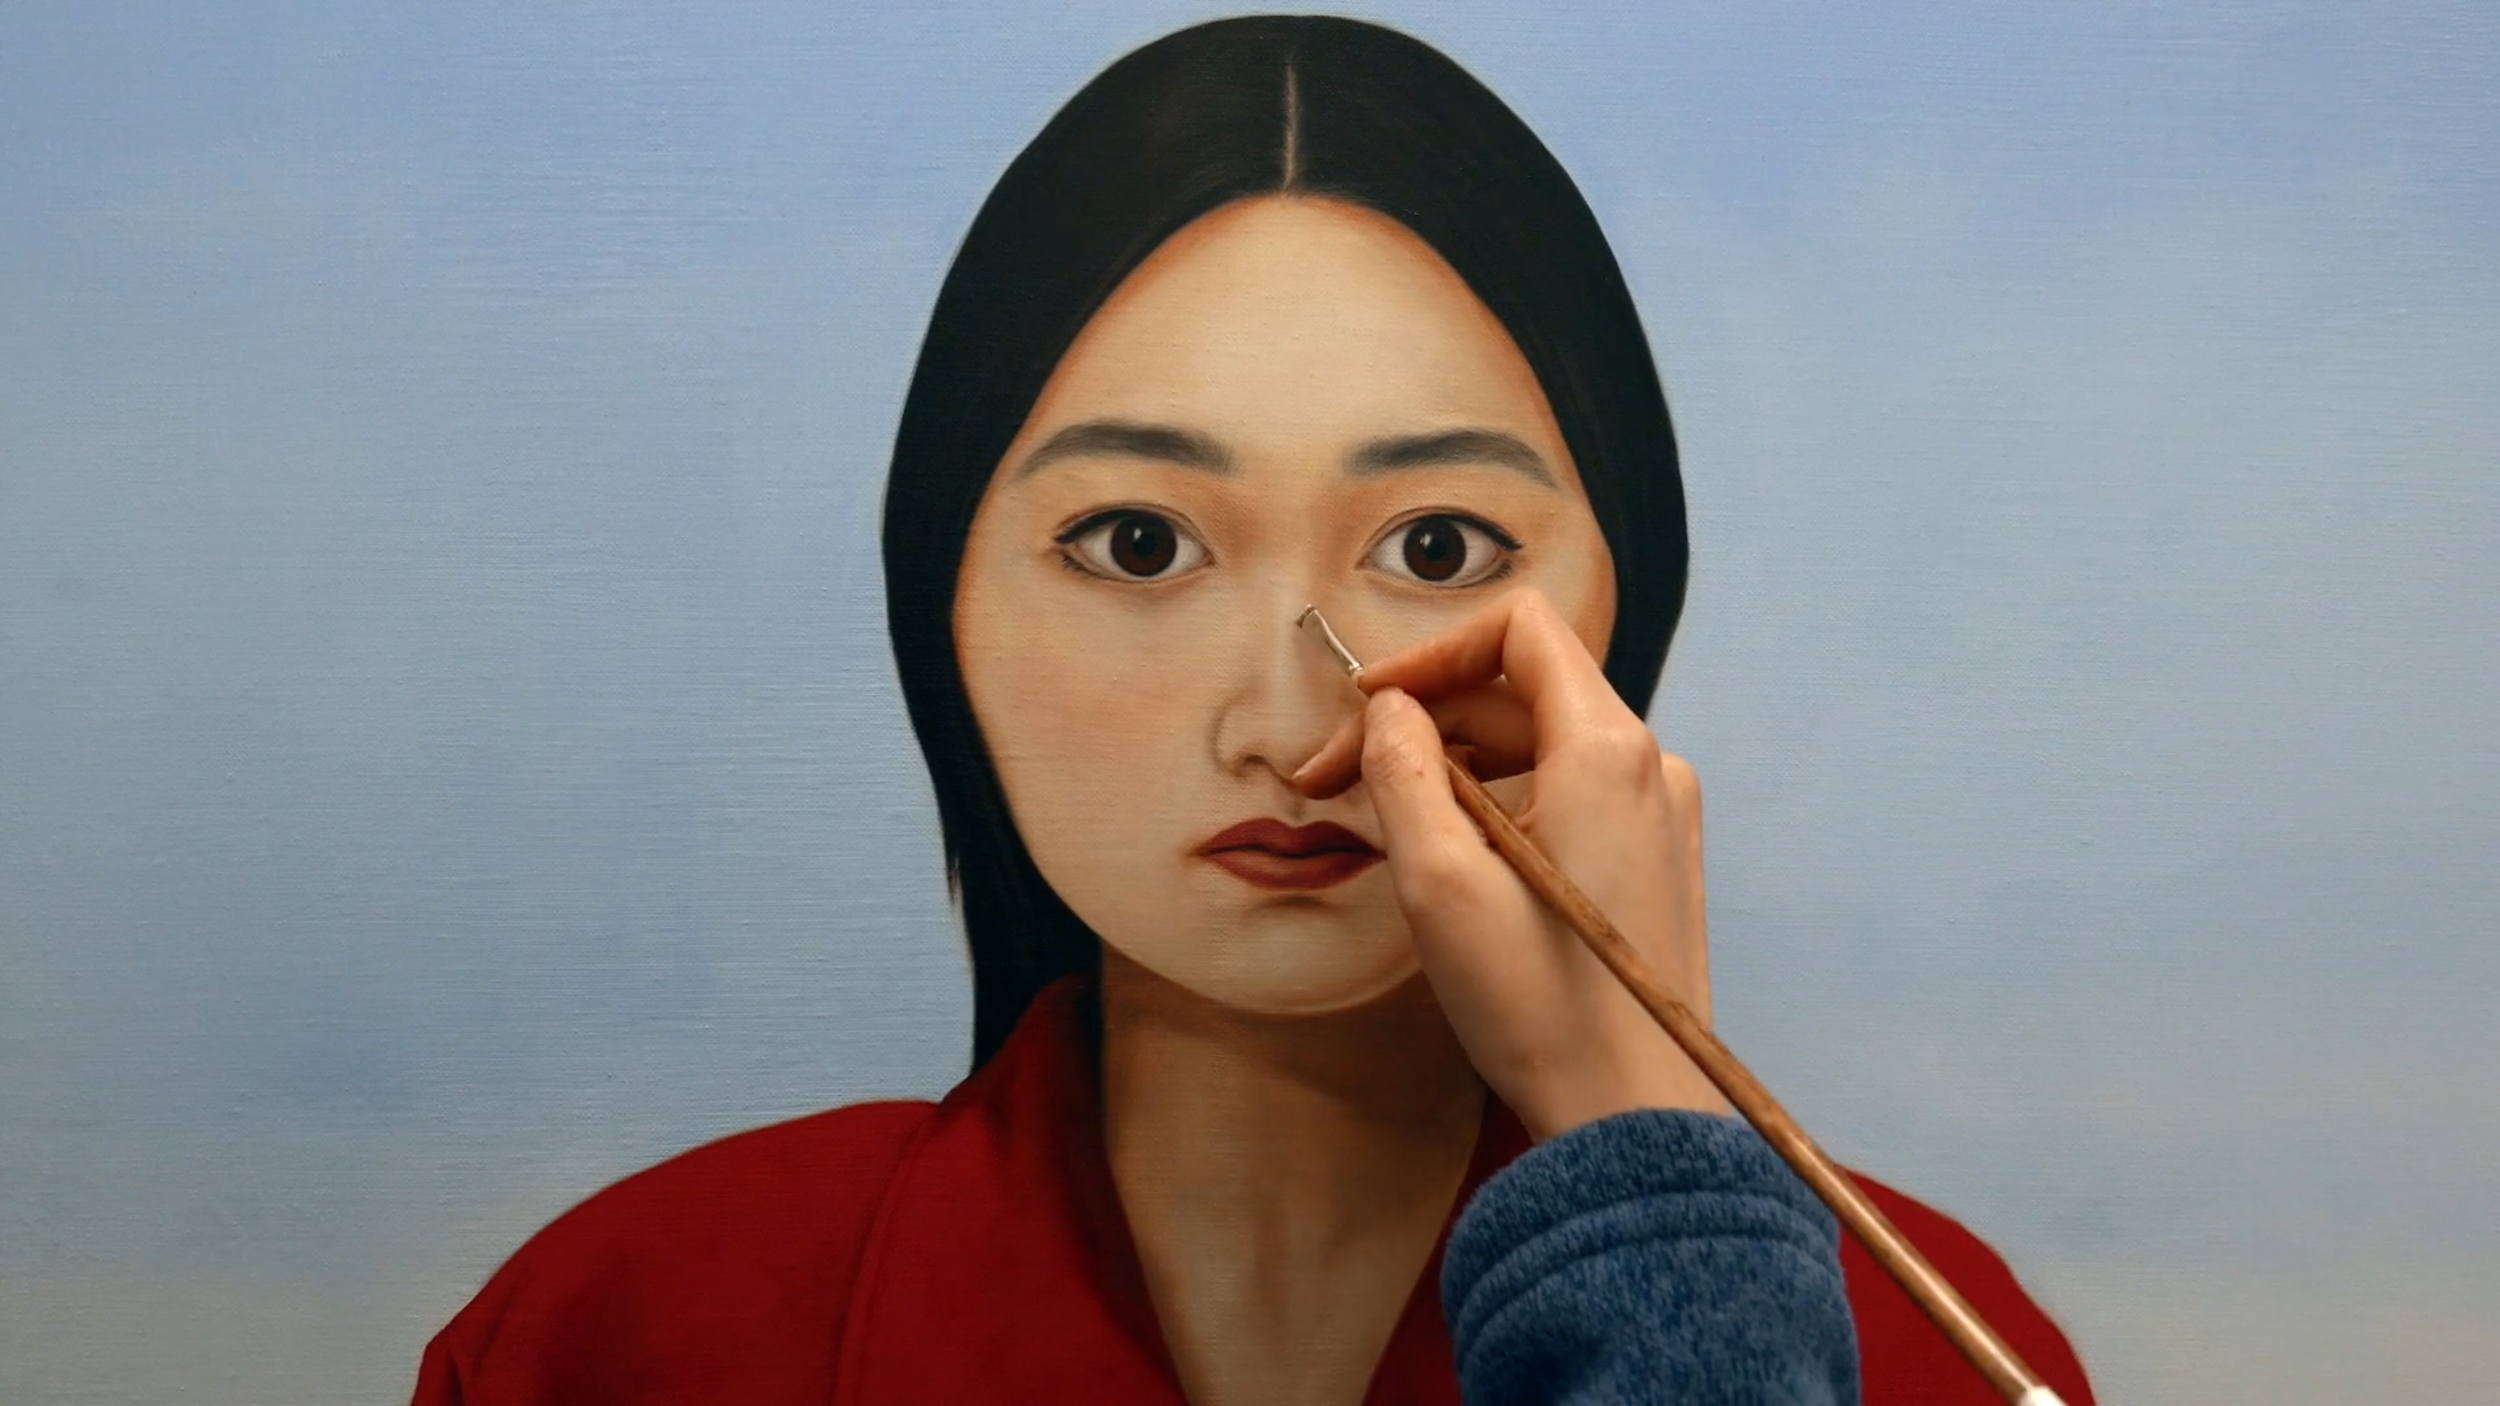 melissa chen portrait red short film documentary still